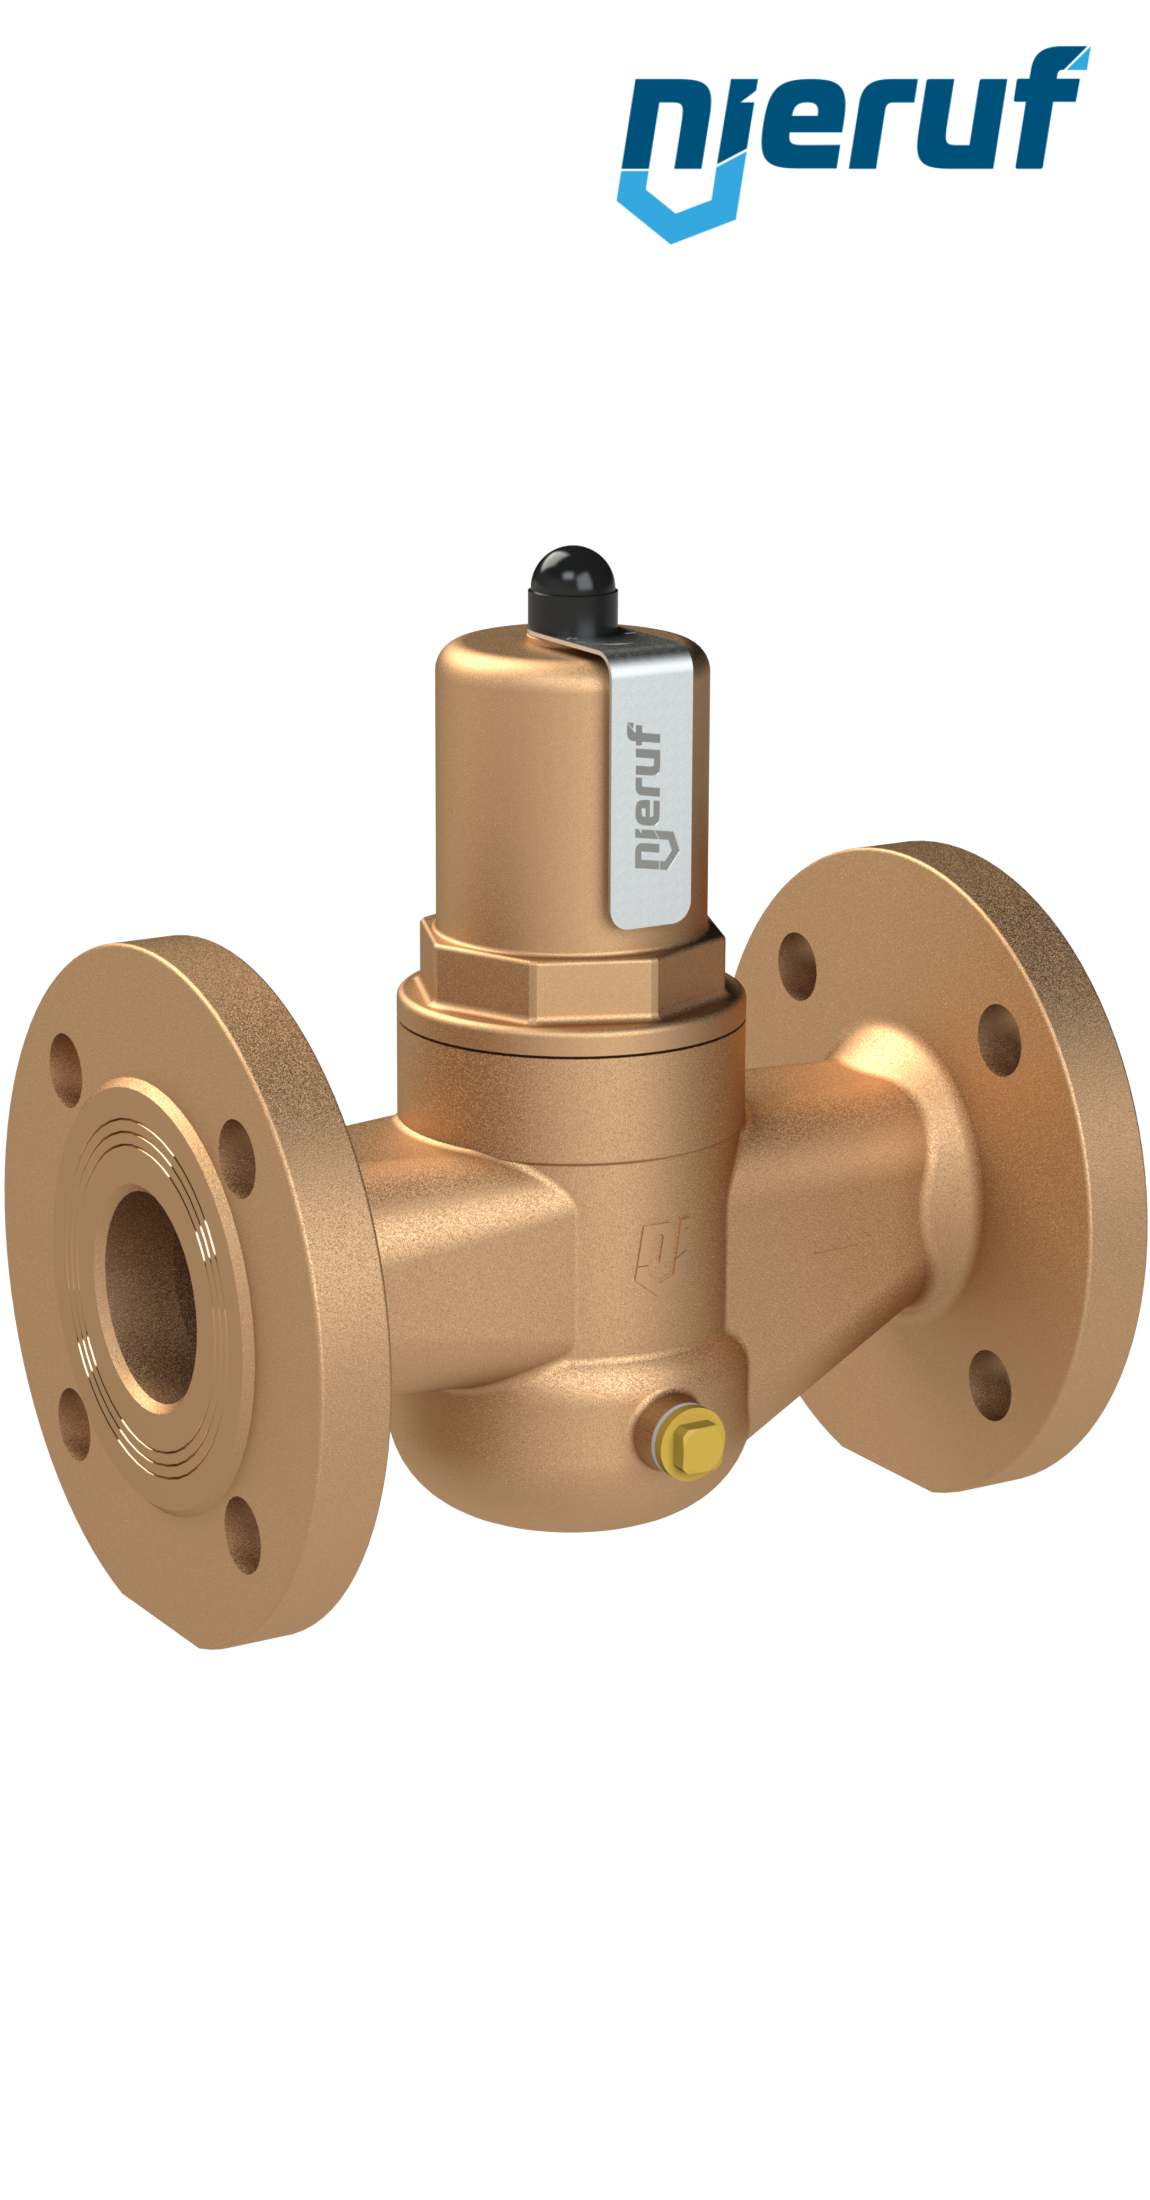 Flange-pressure reducing valve DN 40 PN16 DM05 gunmetal/brass EPDM 1.0 - 8.0 bar